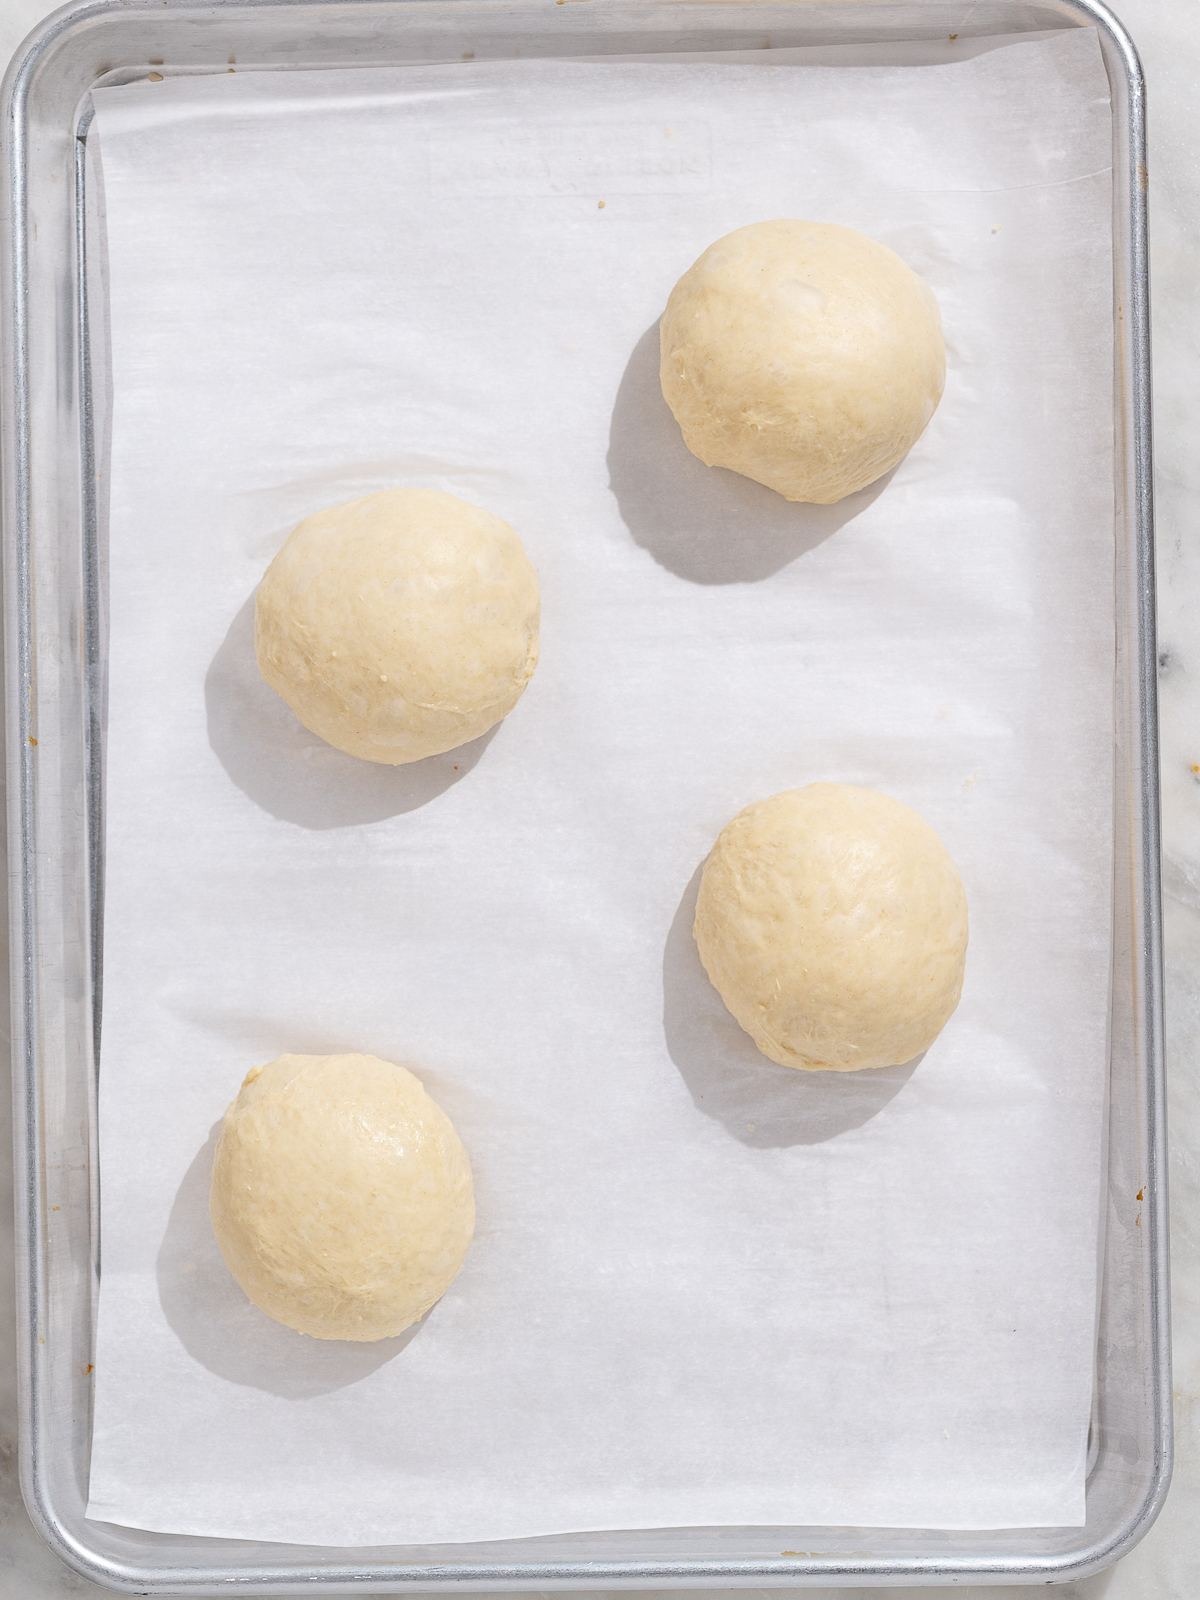 shaped dough balls on baking sheet before rising